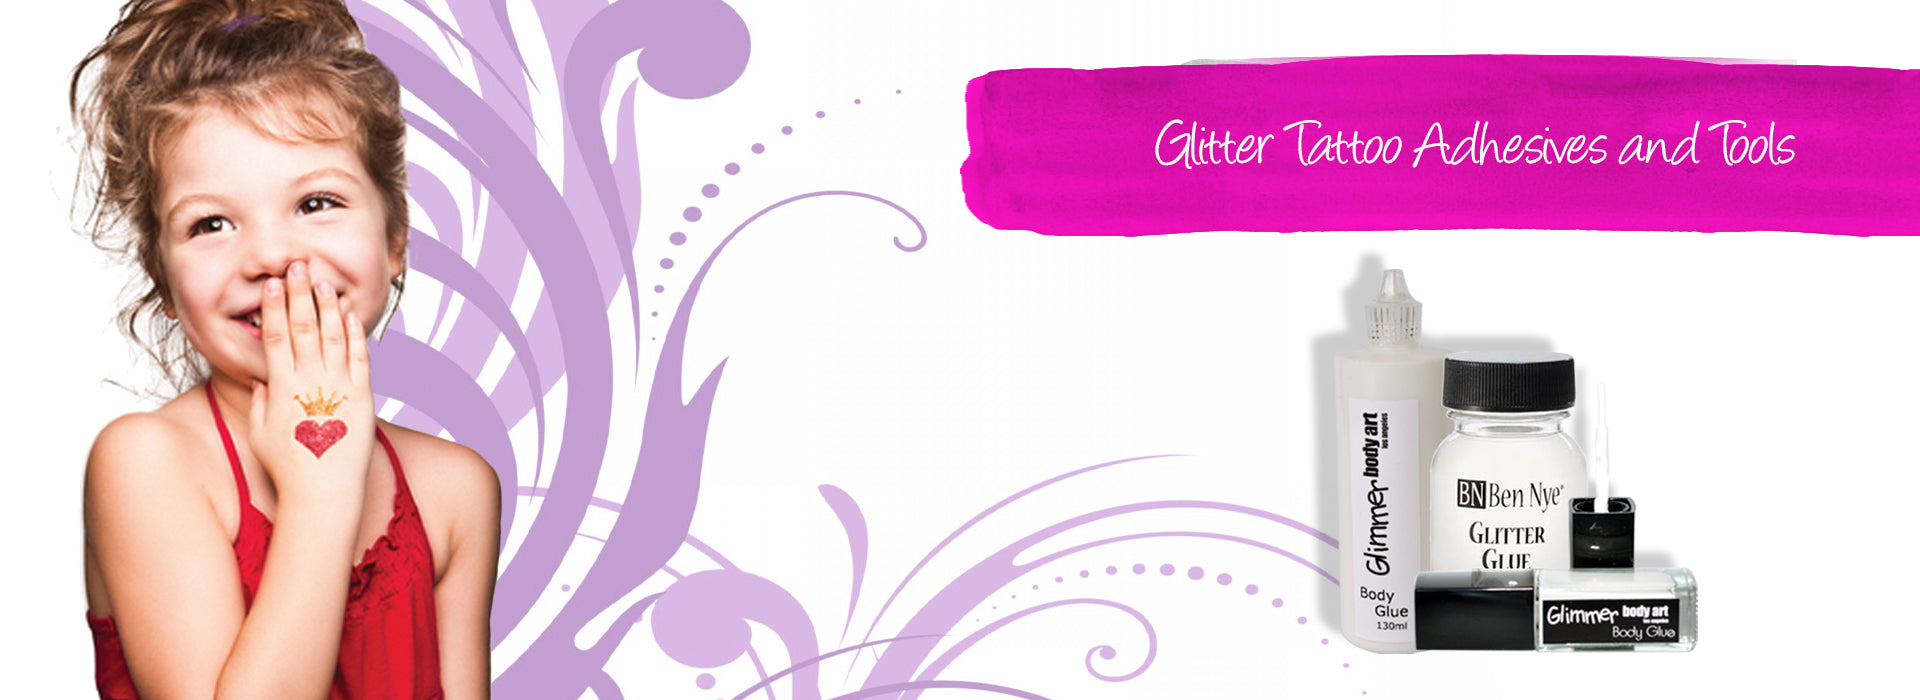 Glitter Tattoo Adhesives & Tools